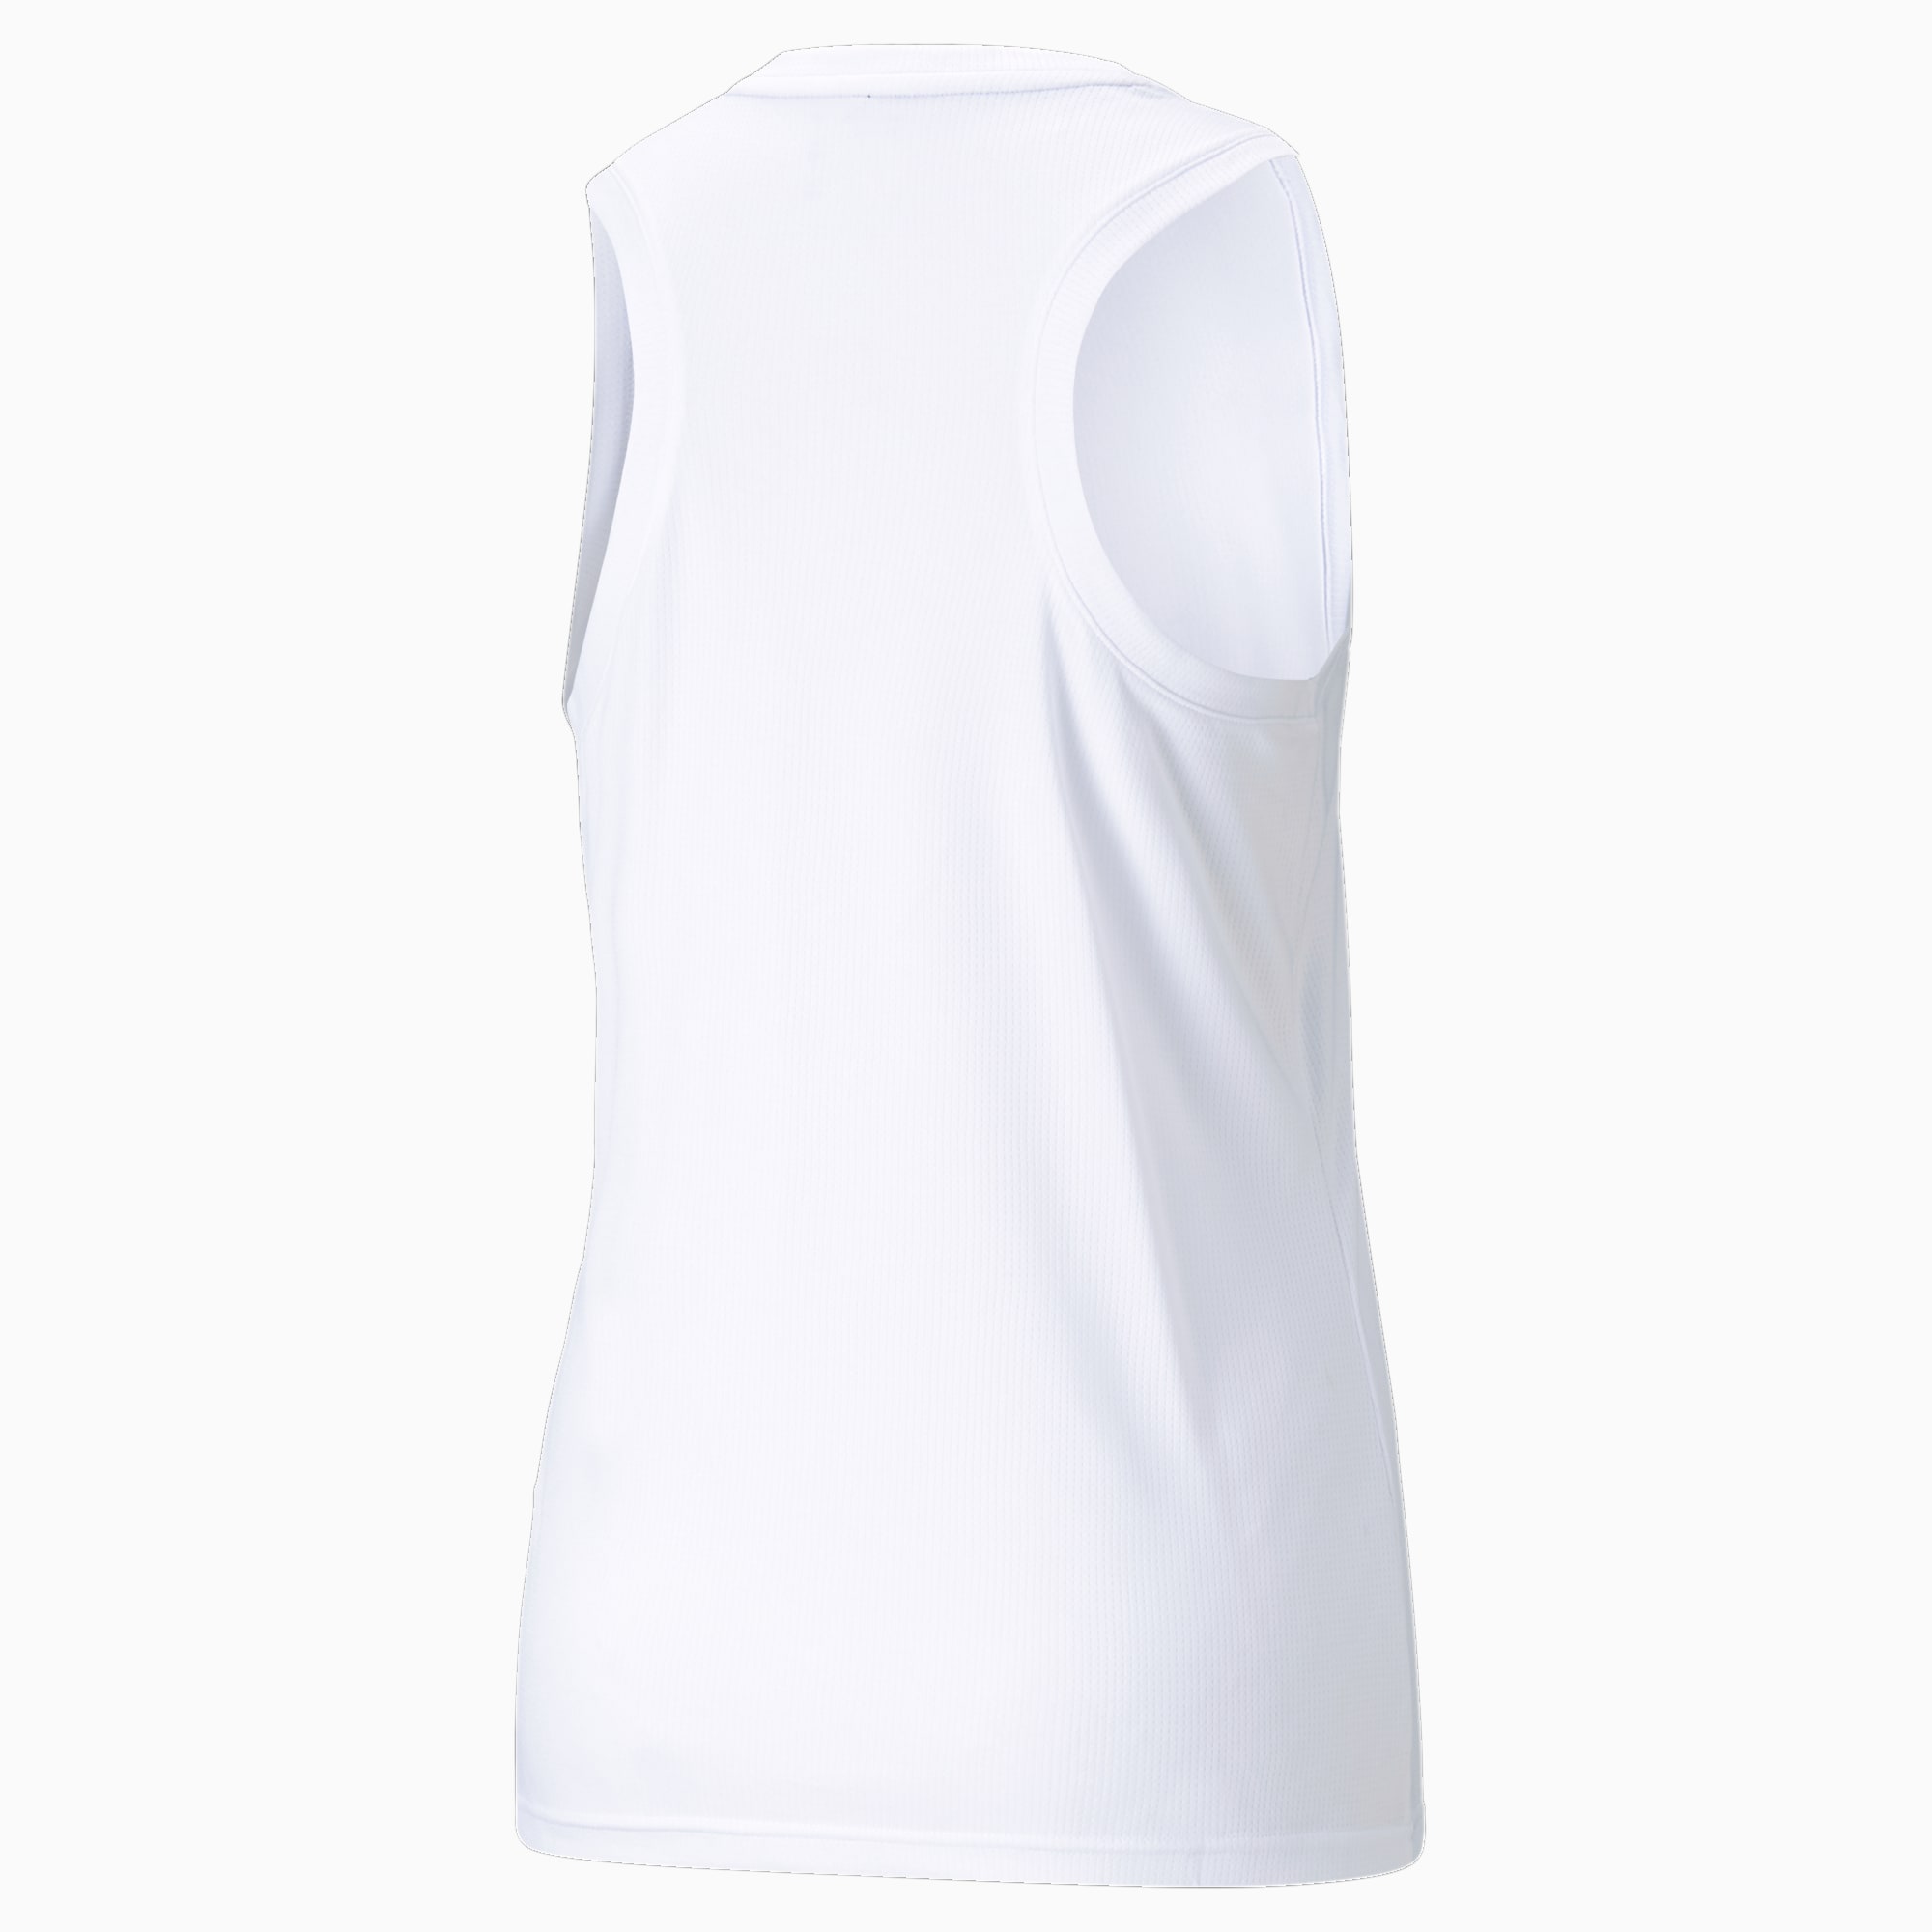 PUMA Performance Women's Training Tank Top Shirt, White, Size 3XL, Clothing